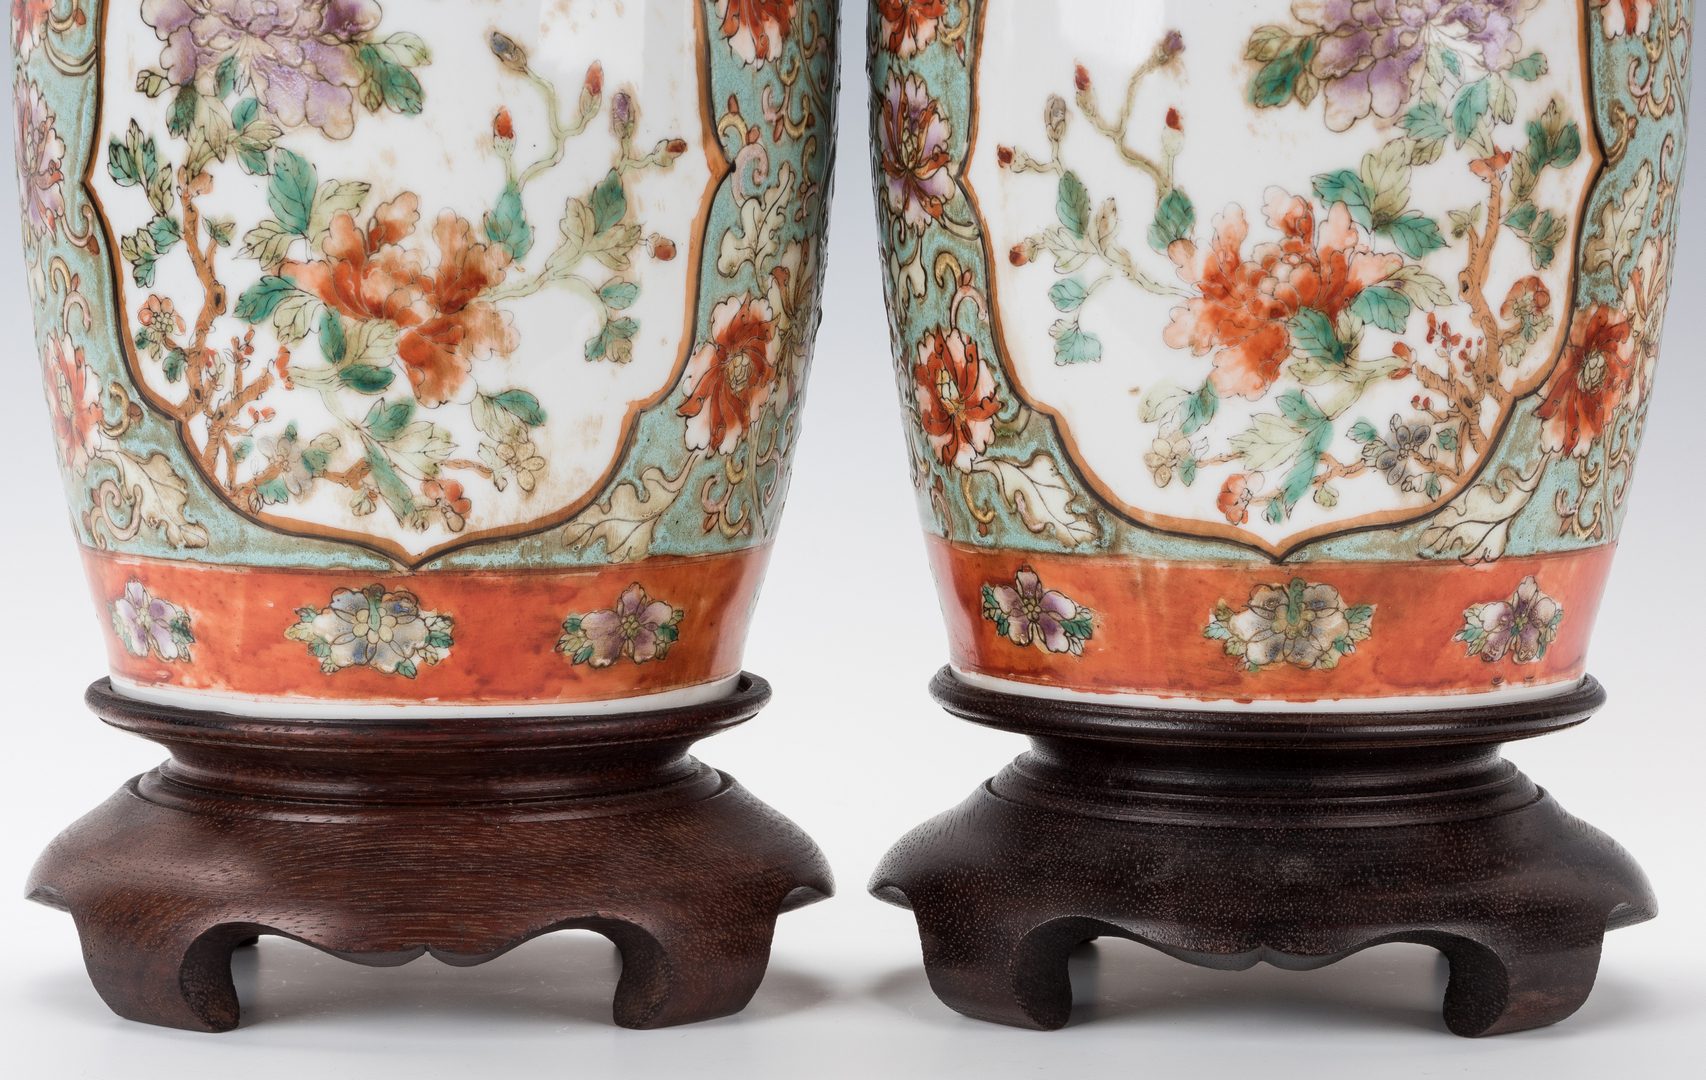 Lot 765: Pr. Chinese Export Porcelain Vases, Modern